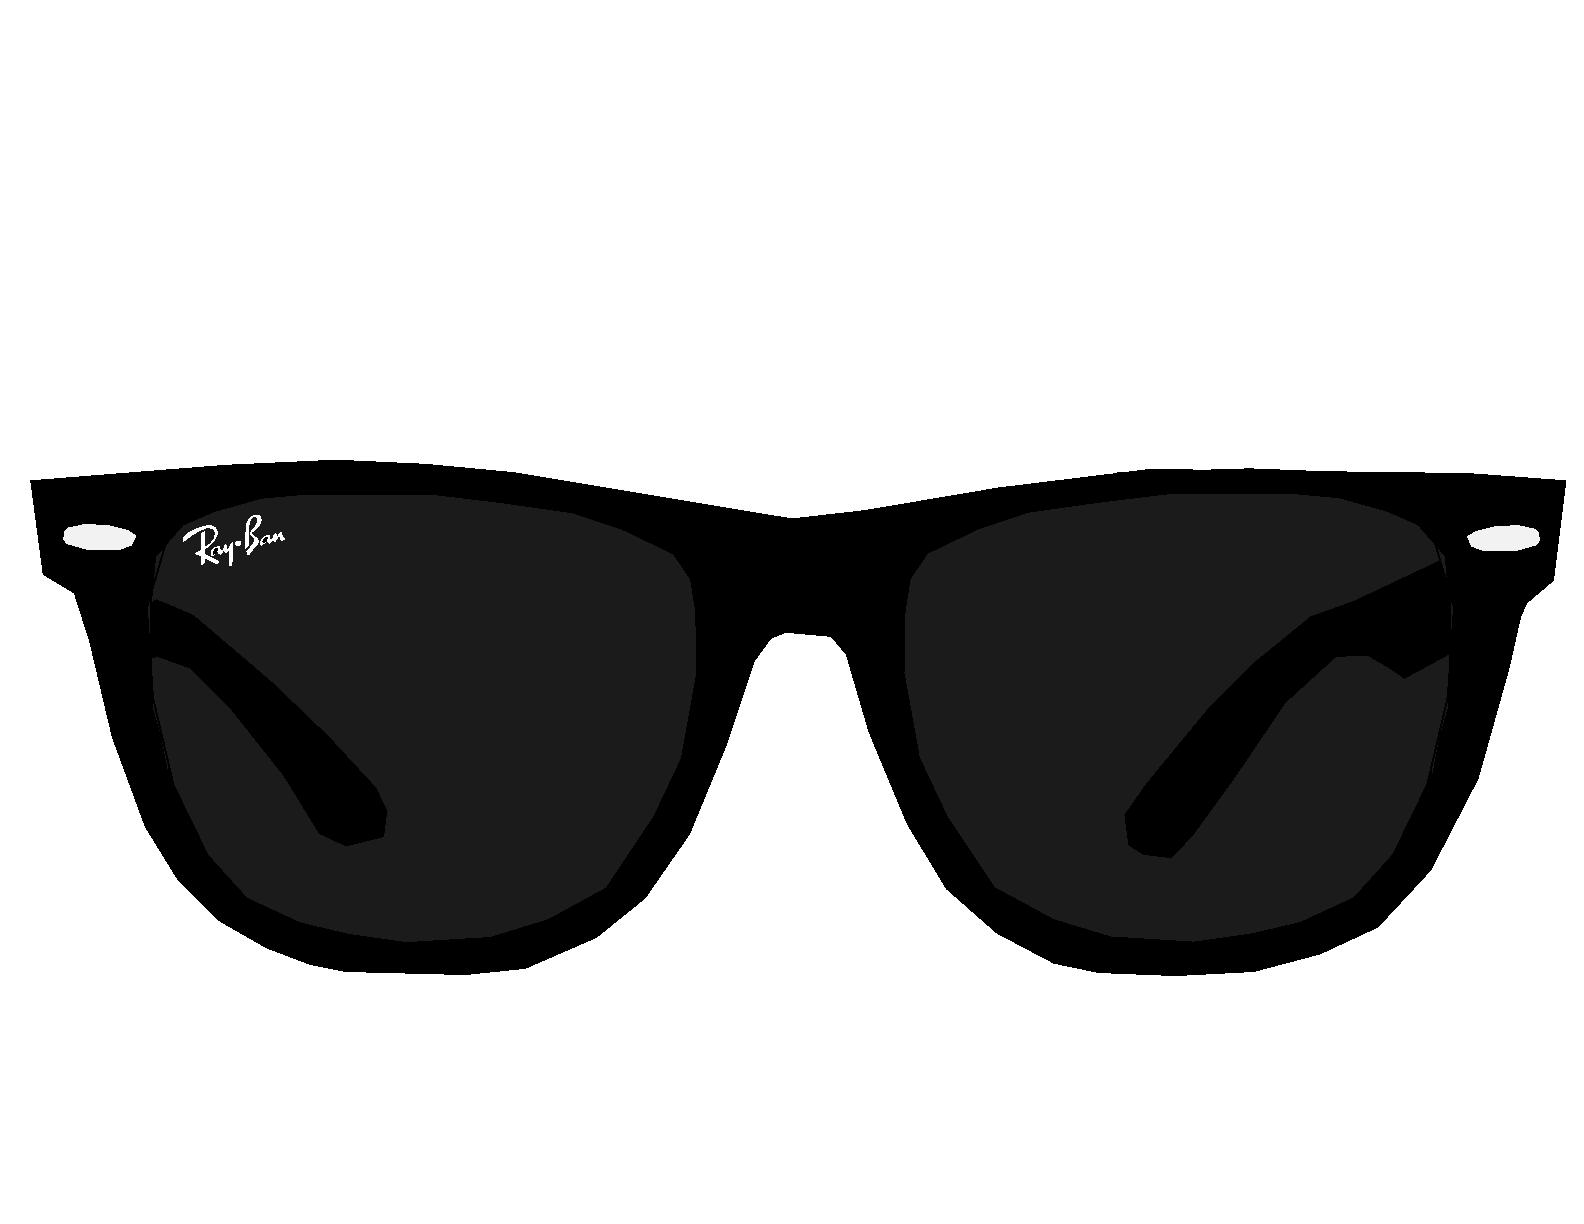 Sunglasses glasses clip art 2